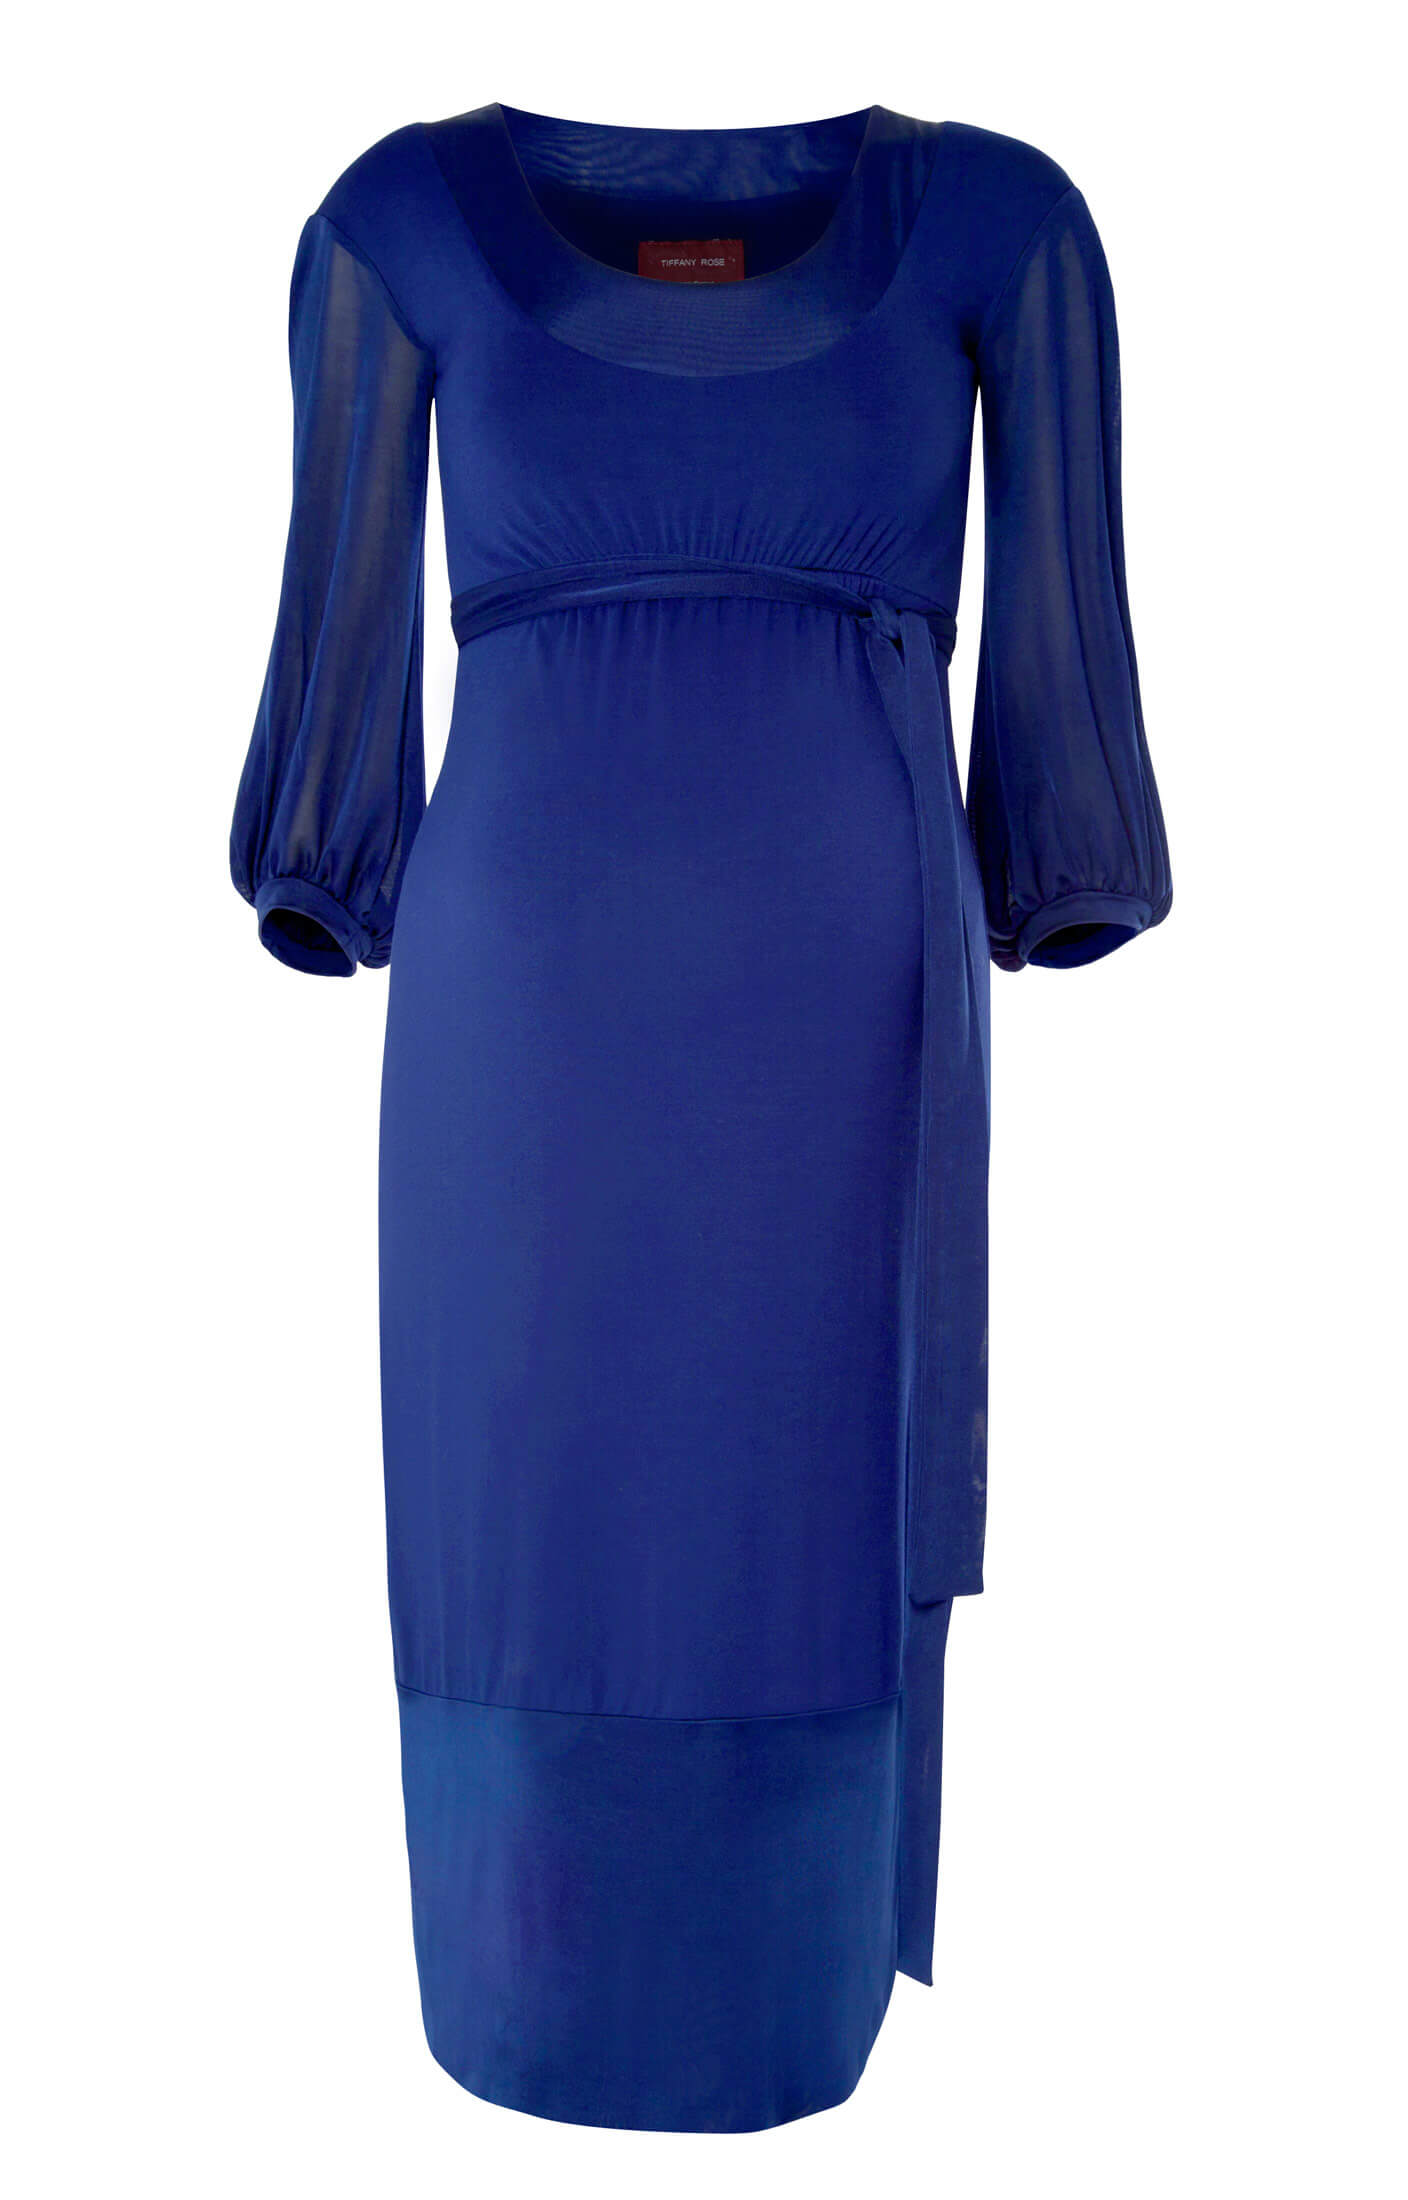 Mia Maternity Dress (Eclipse Blue) - Maternity Wedding Dresses, Evening ...